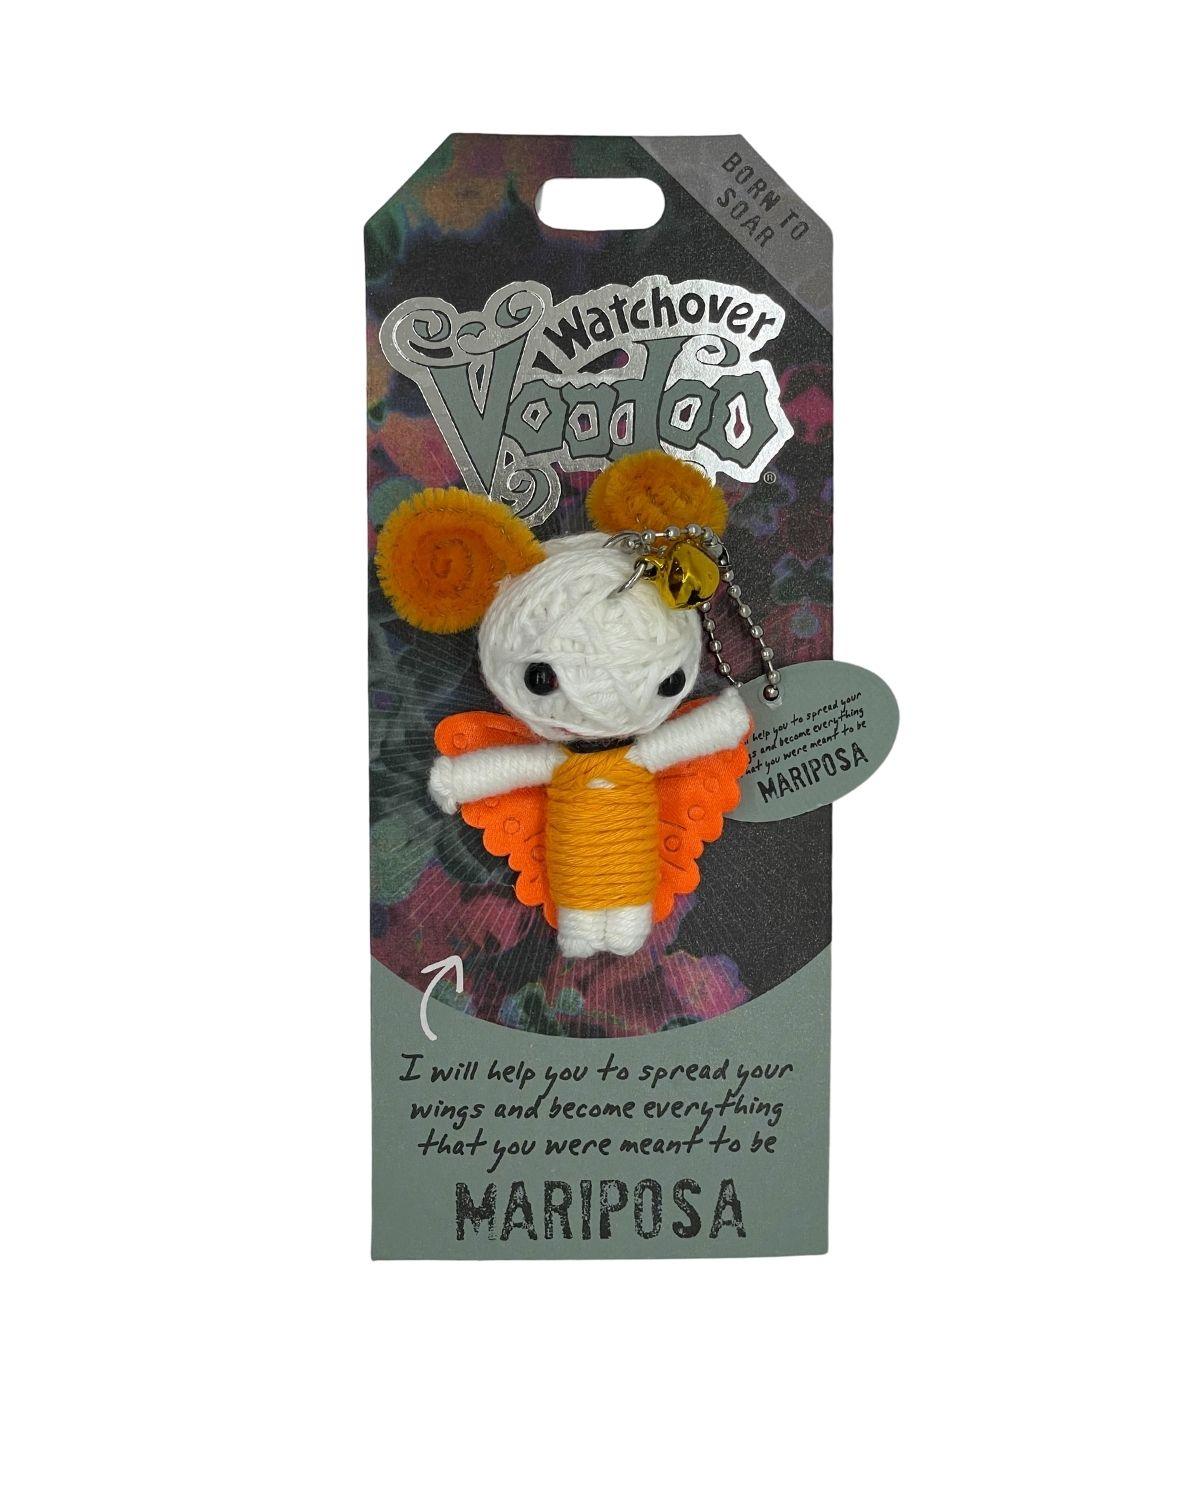 Watchover Voodoo Doll - Mariposa - Watchover Voodoo - String Doll